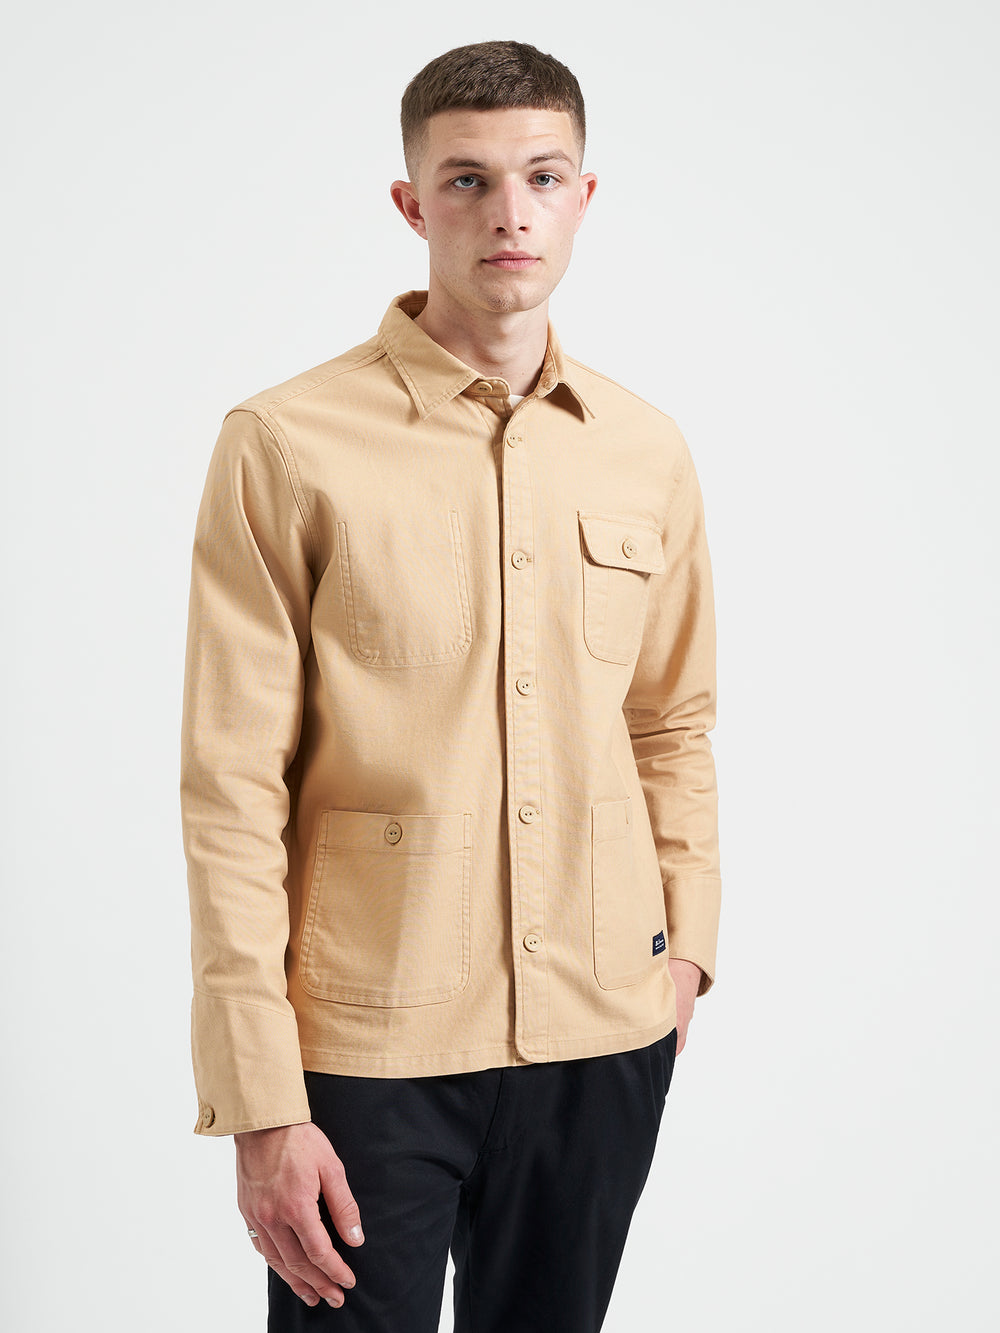 Garment Dye Chore Shirt Jacket - Mustard Yellow